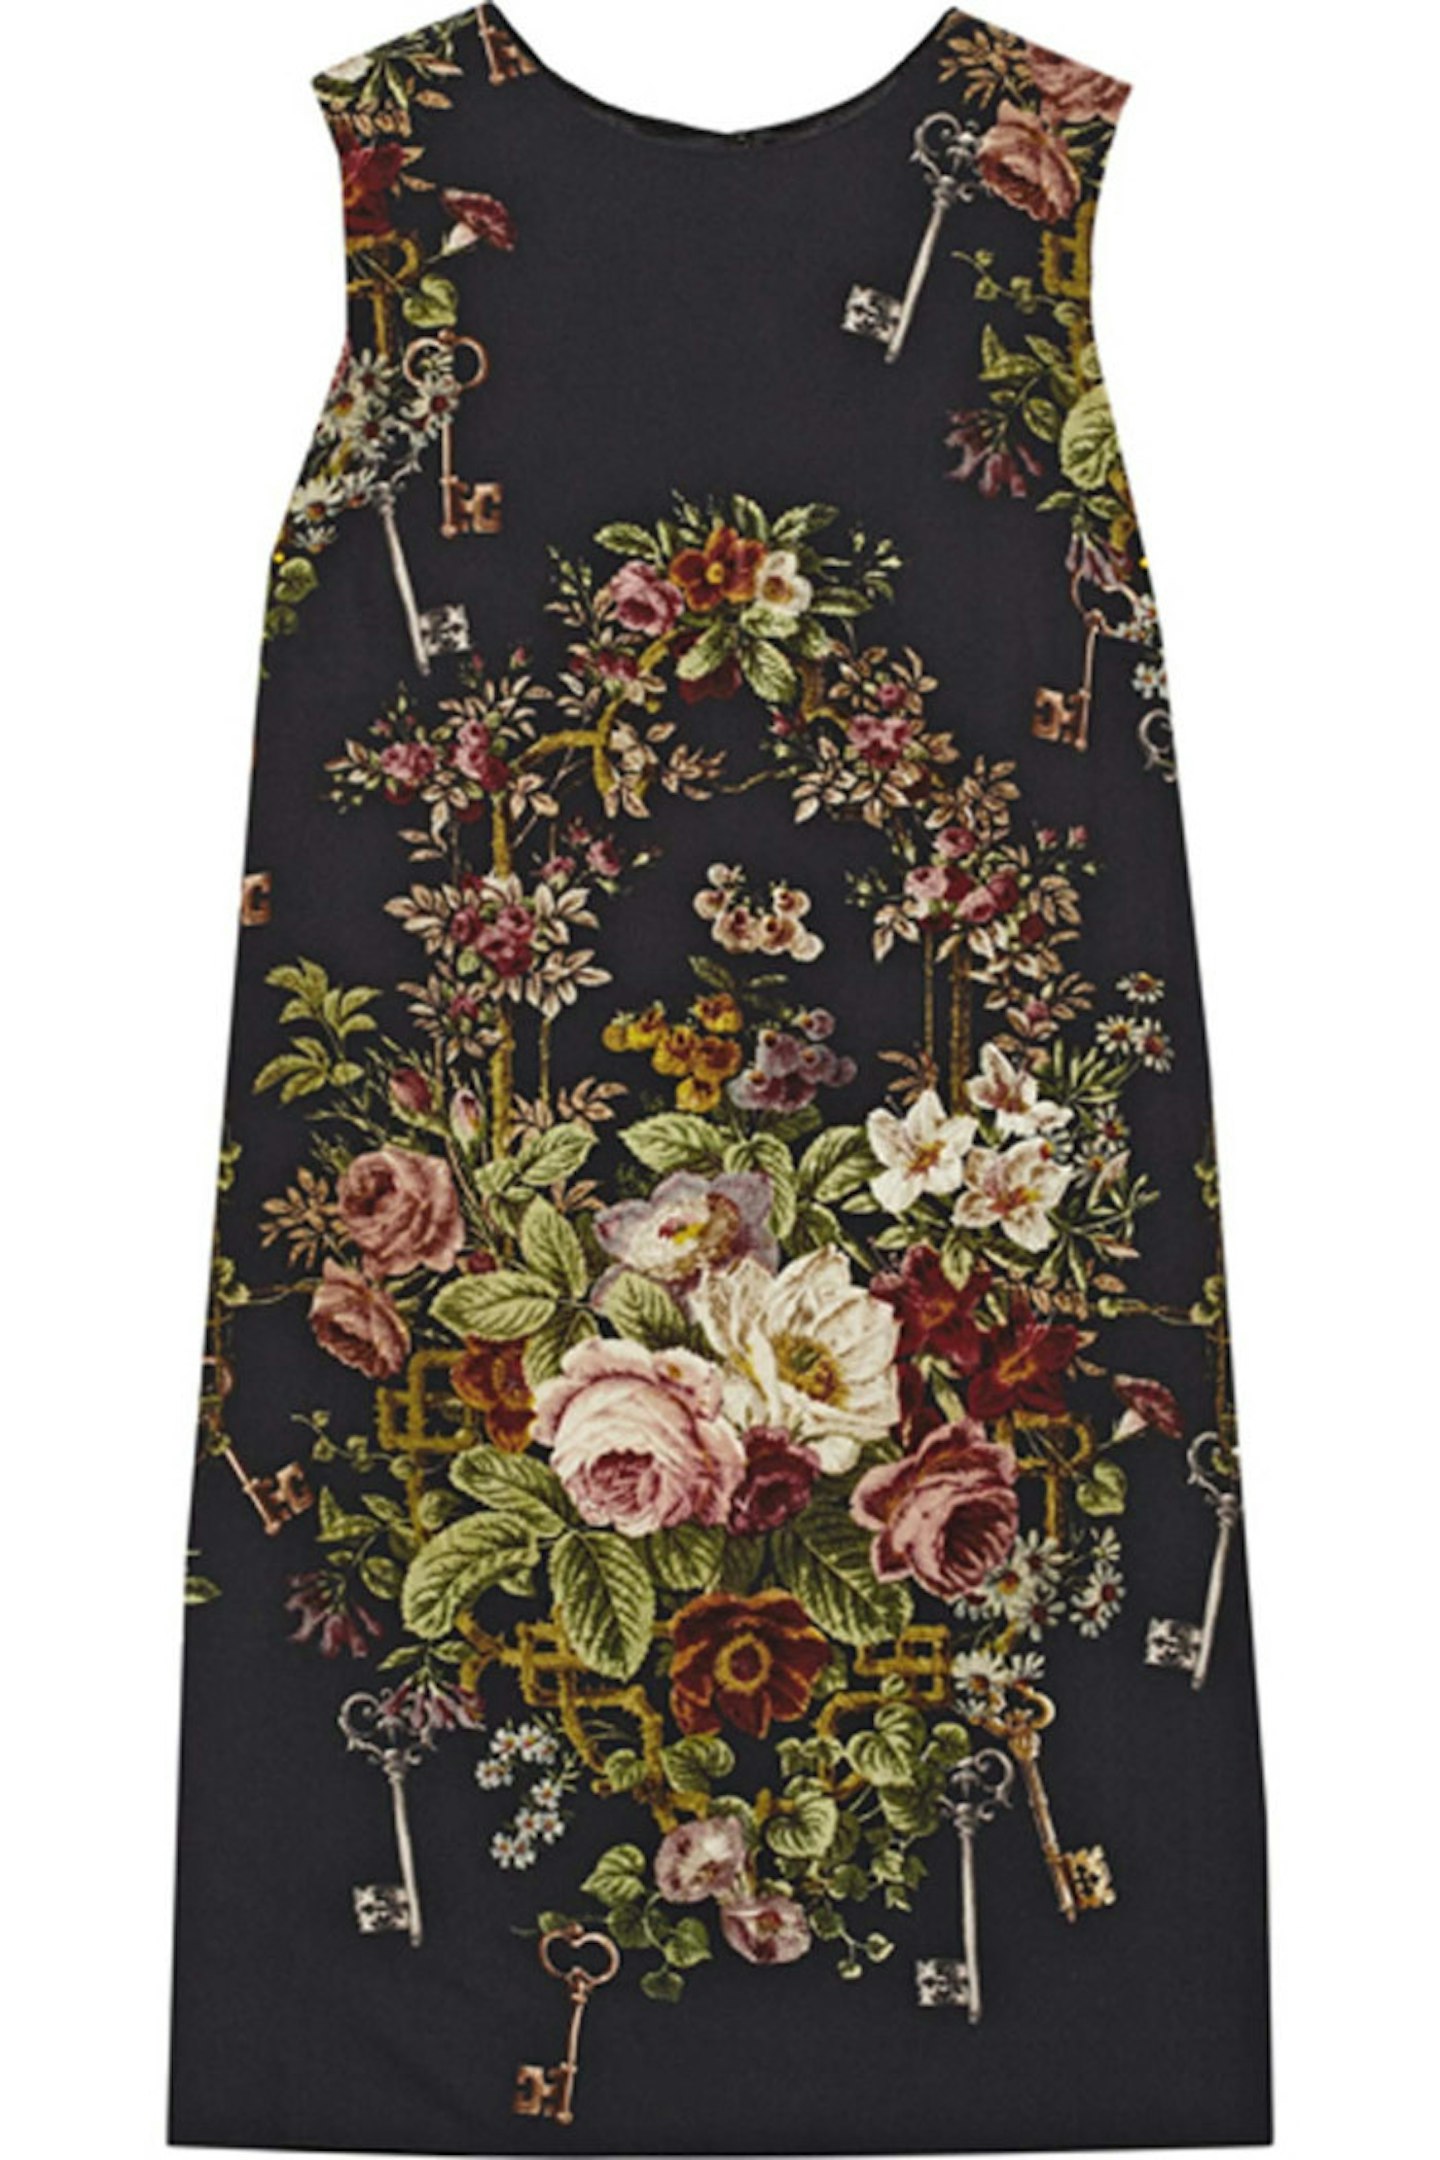 11. Floral Print Mini Dress, £950, Dolce & Gabbana at Net-A-Porter